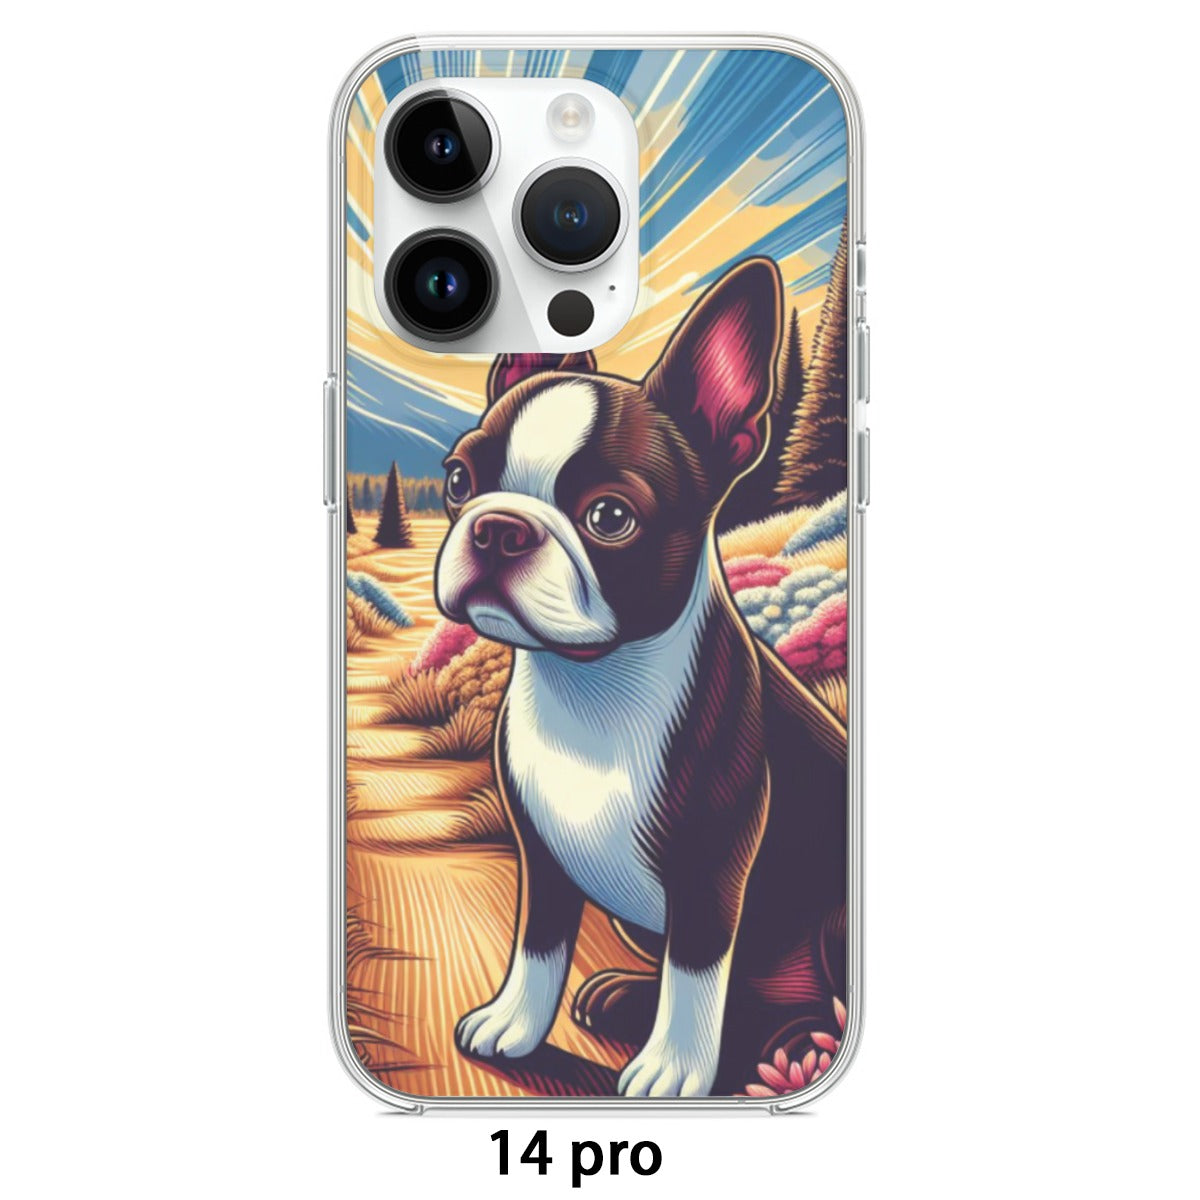 Ellie - iPhone case for Boston Terrier lovers